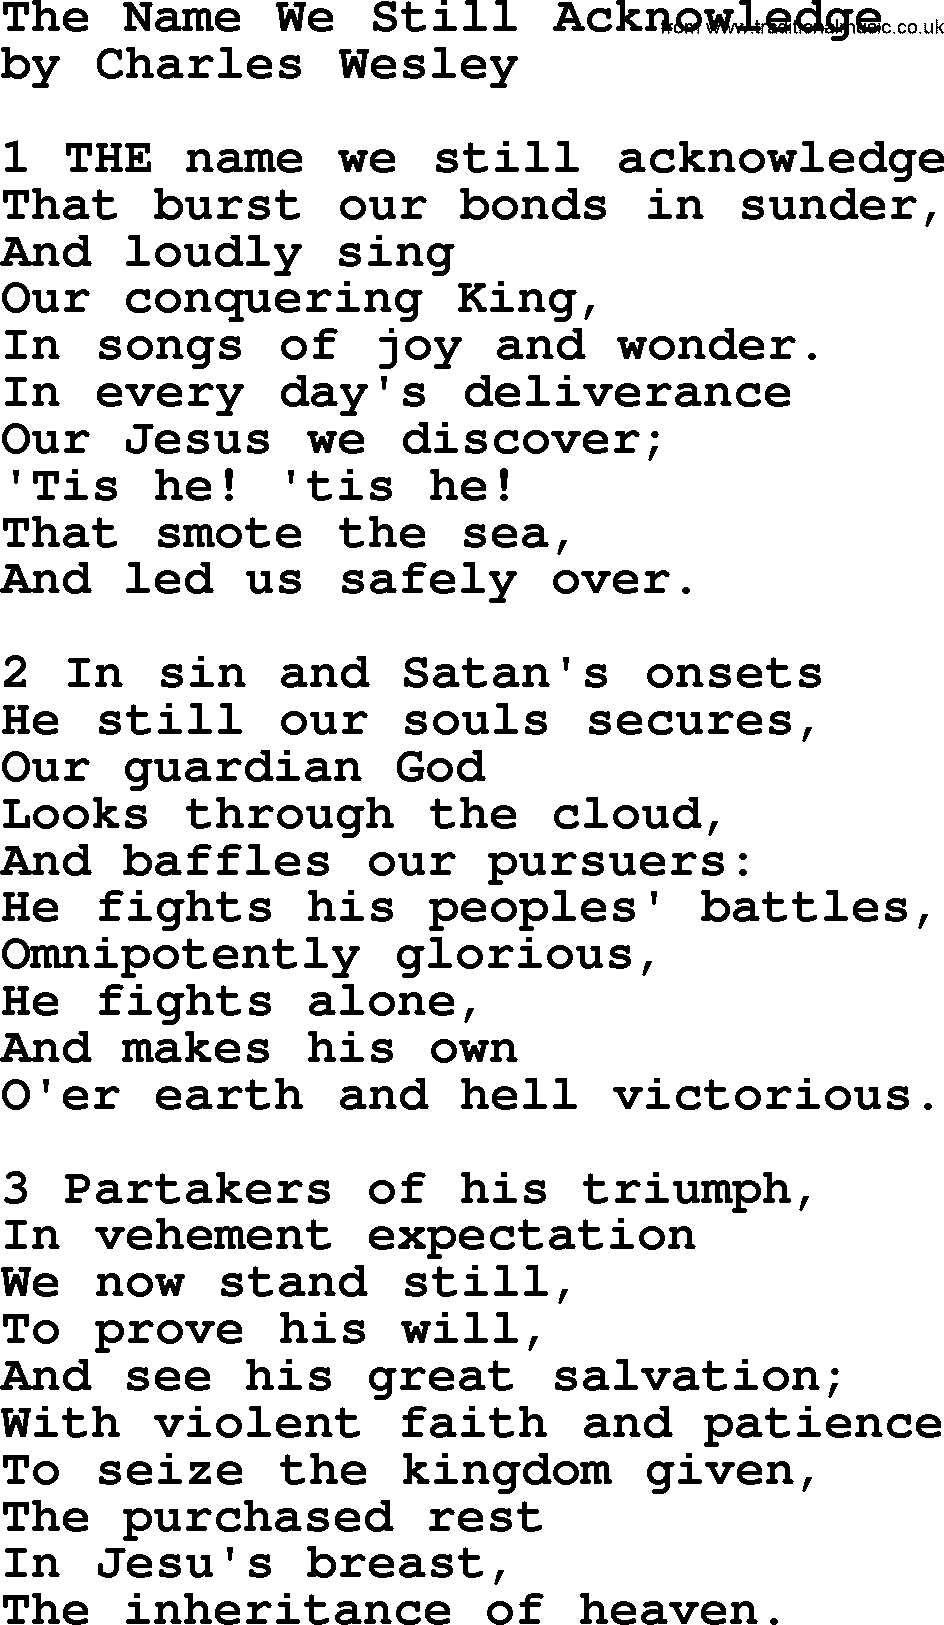 Charles Wesley hymn: The Name We Still Acknowledge, lyrics